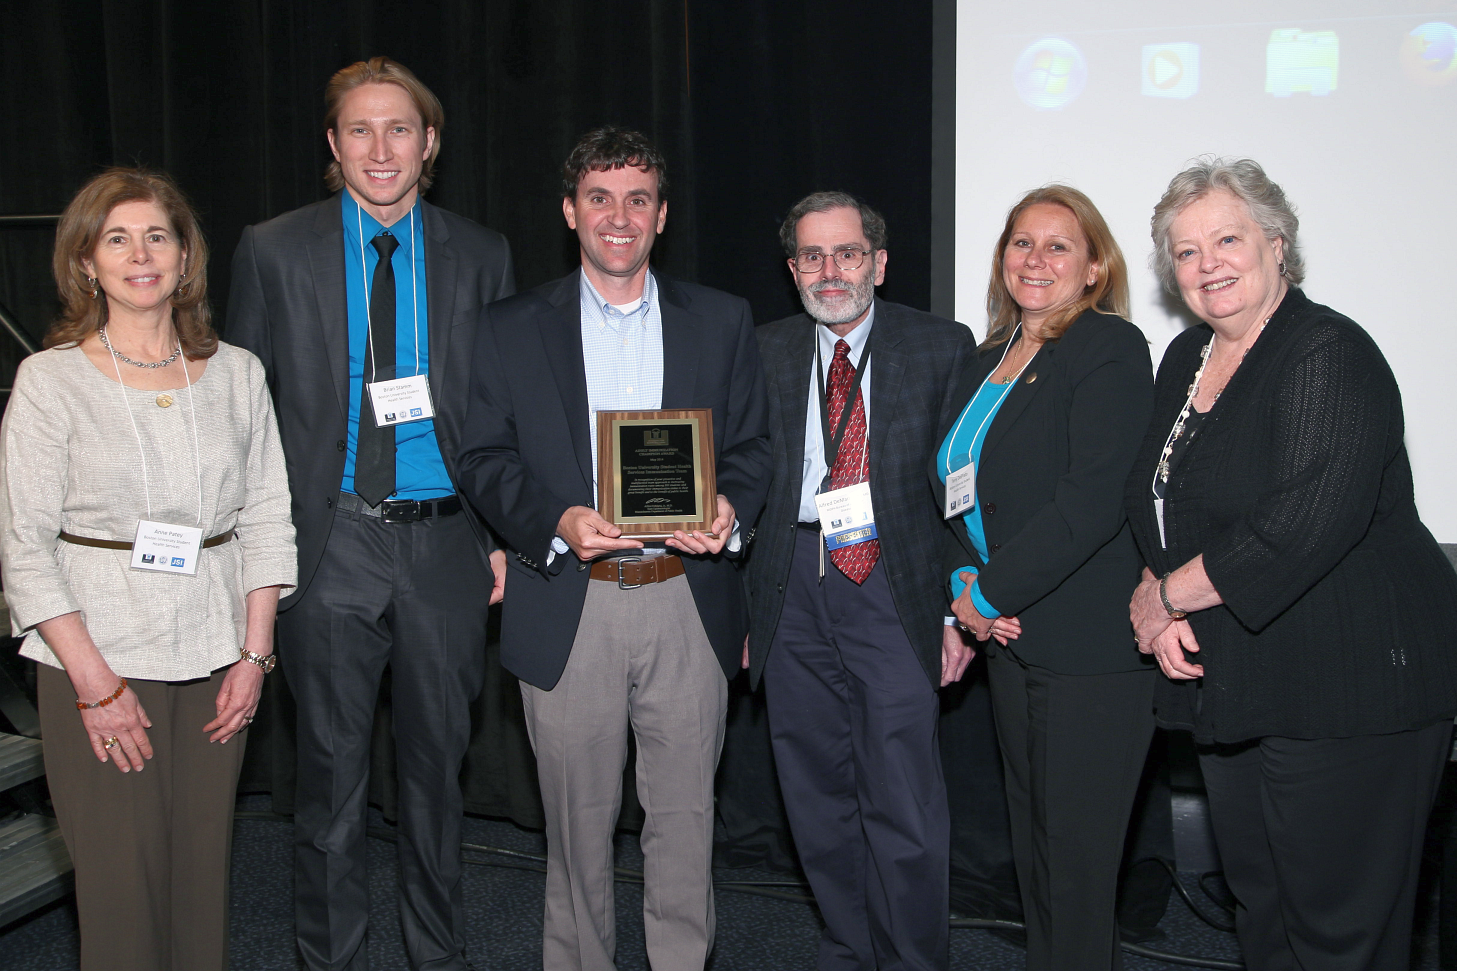 Boston University Student Health Services Immunization Team receiving their award from Alfred DeMaria, Jr, MD.